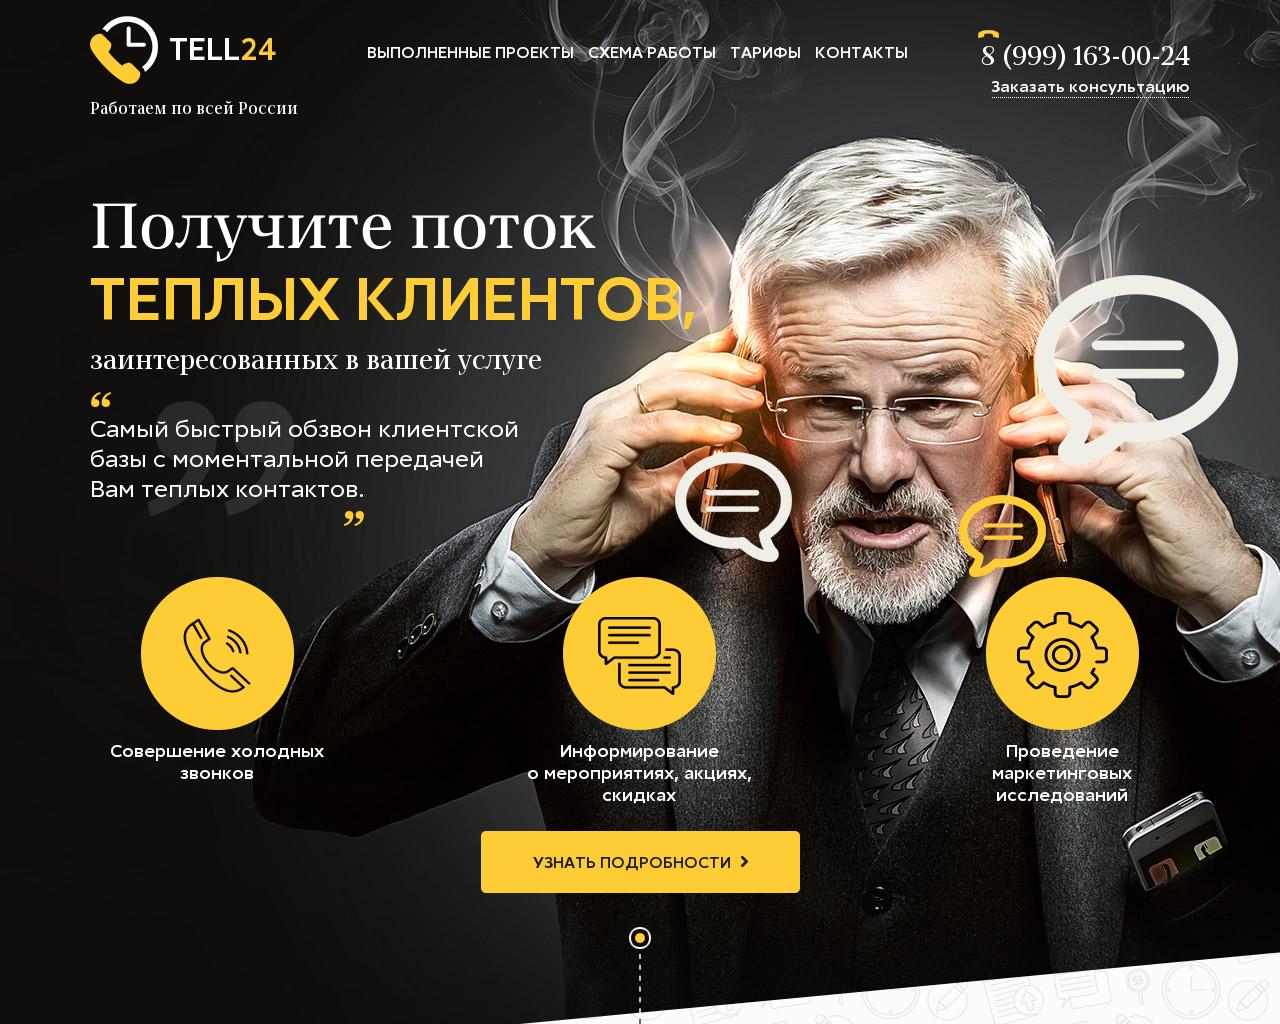 Изображение сайта tell24.ru в разрешении 1280x1024